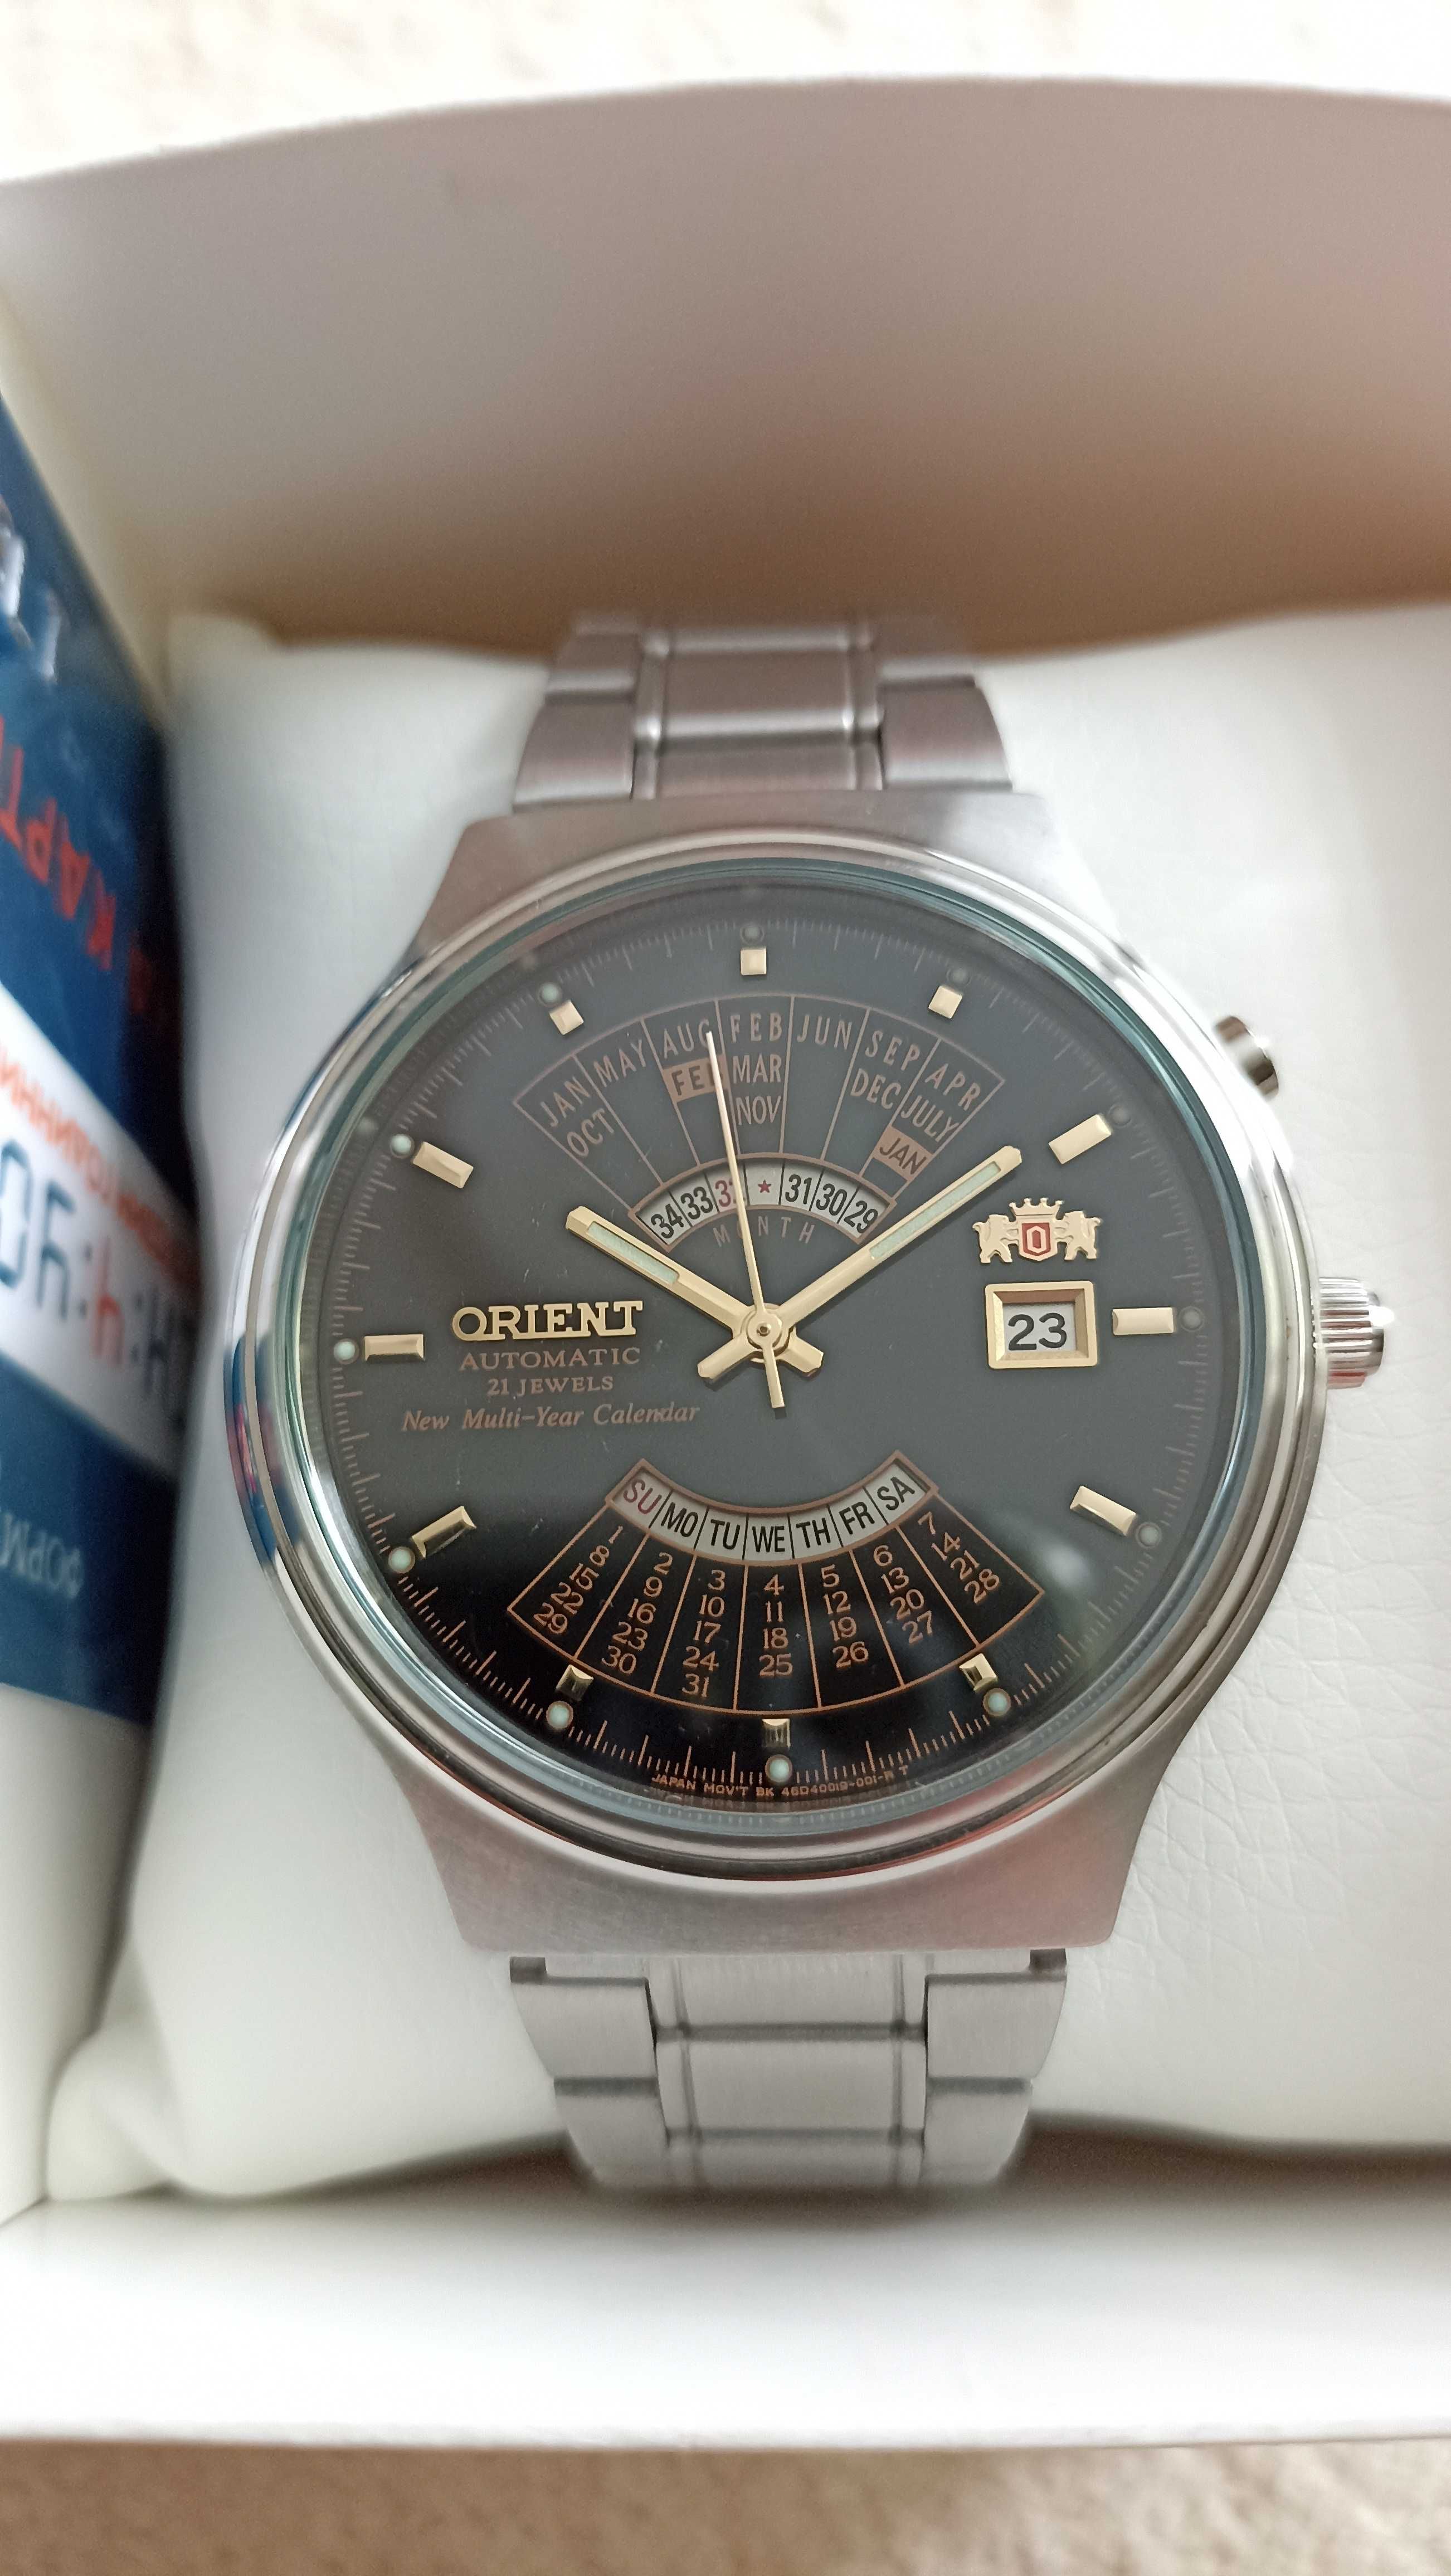 Часы мужские Orient мультикалендарь